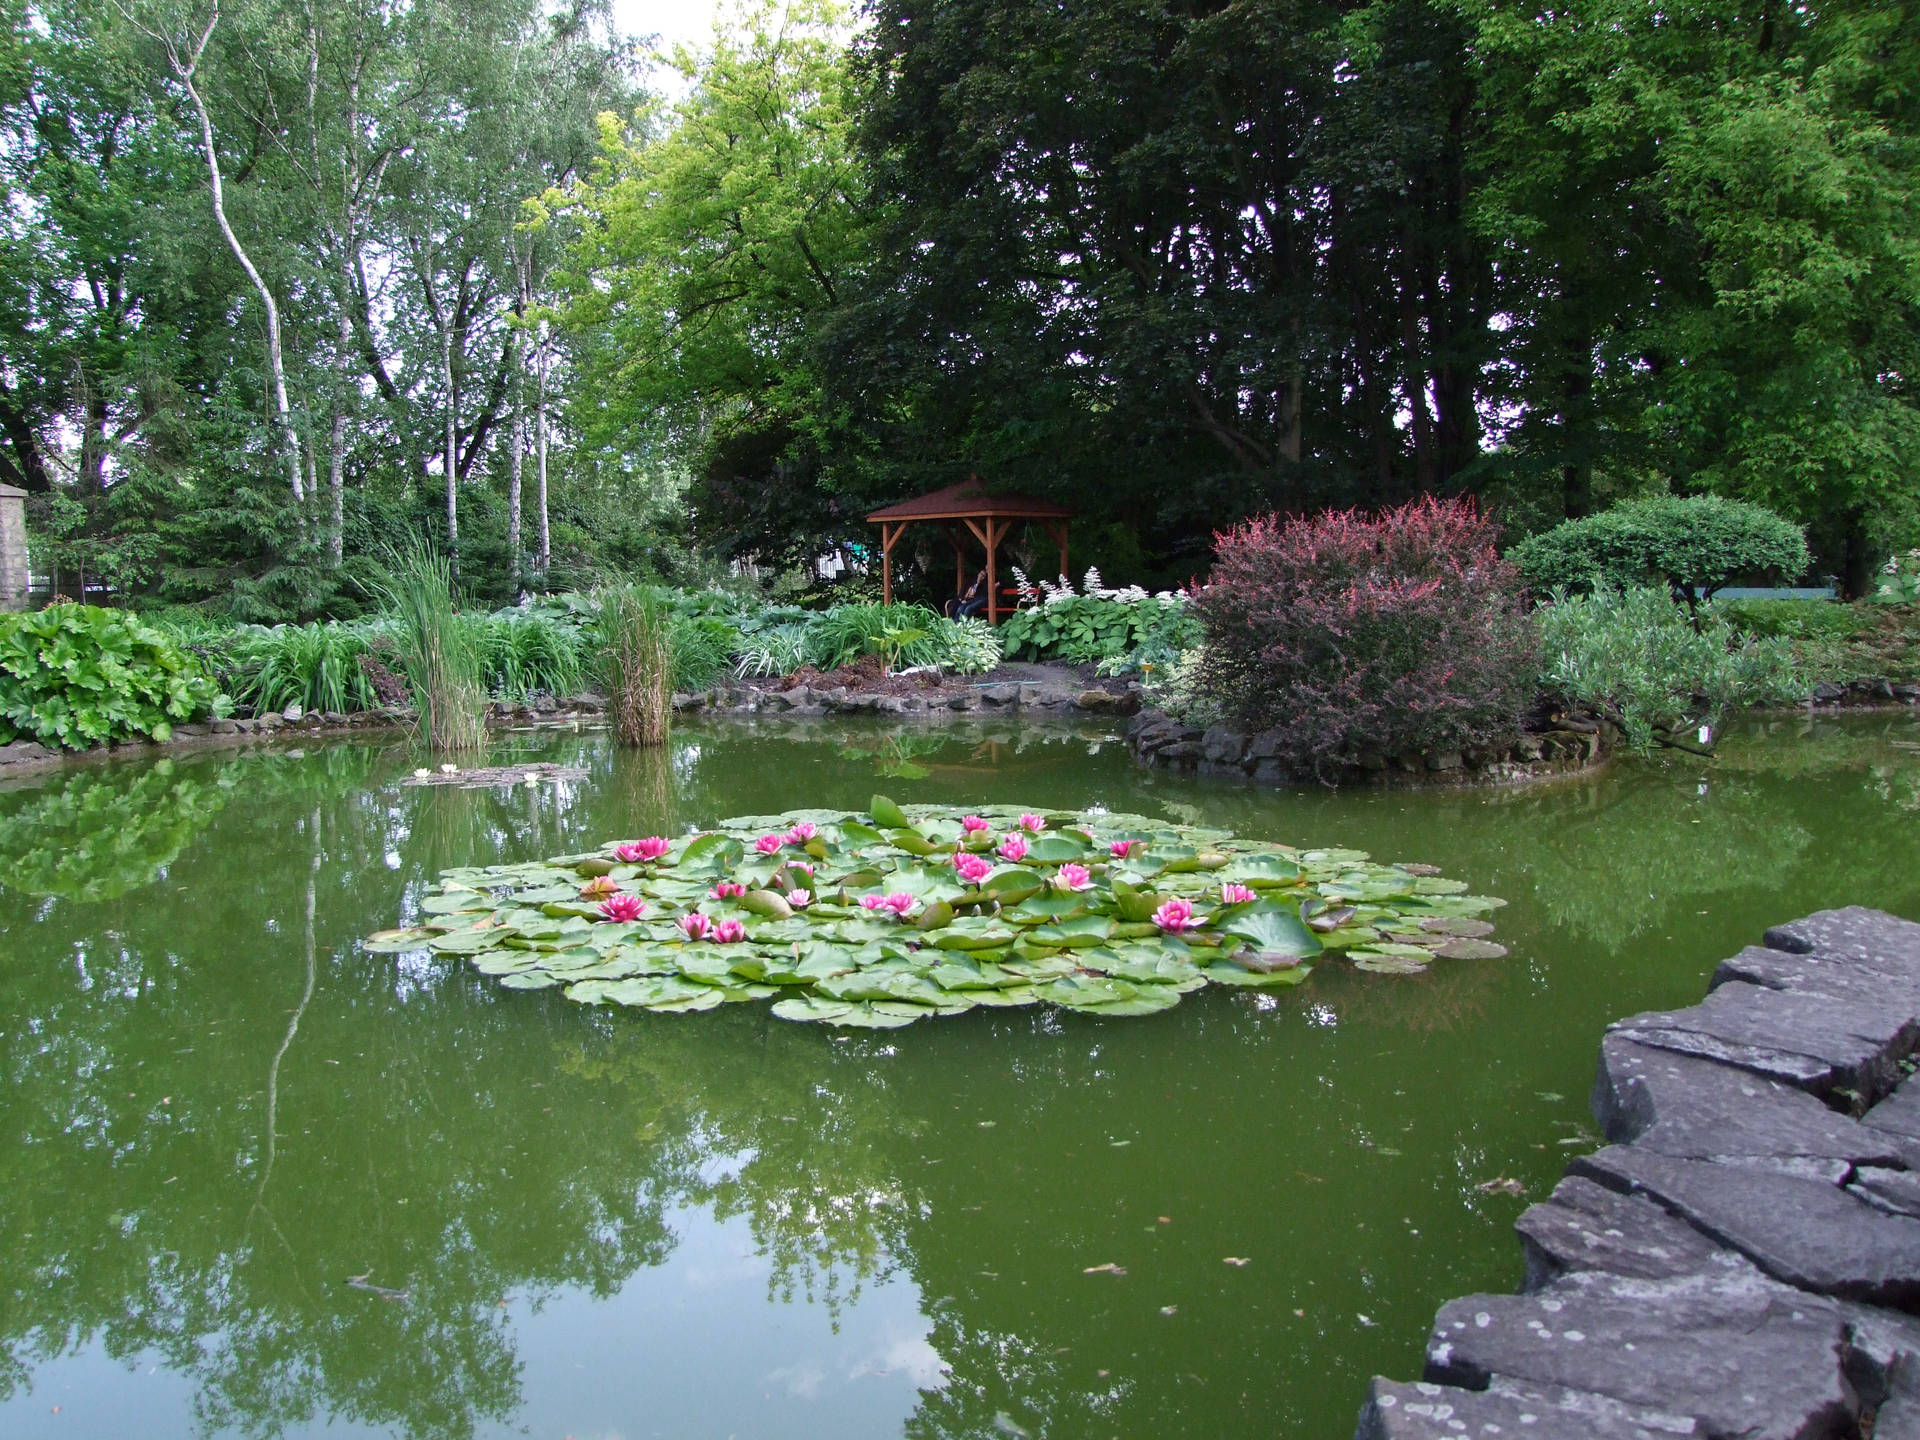 Poland's Jagiellonian University Garden